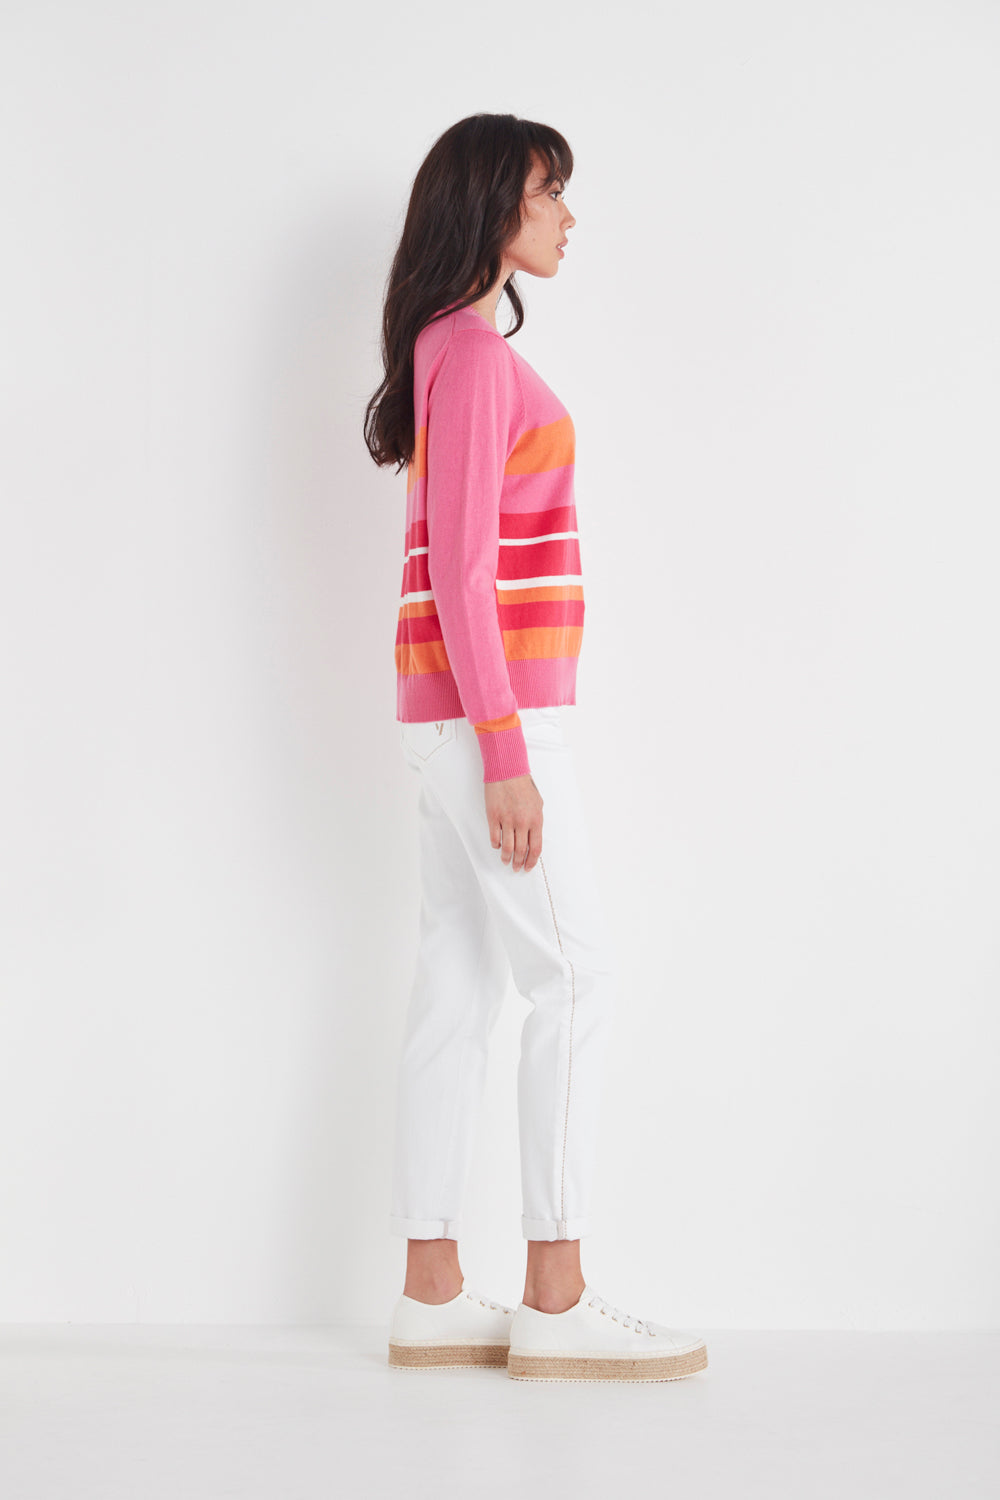 Blair Sweater - Pink Stripe - Sweater VERGE